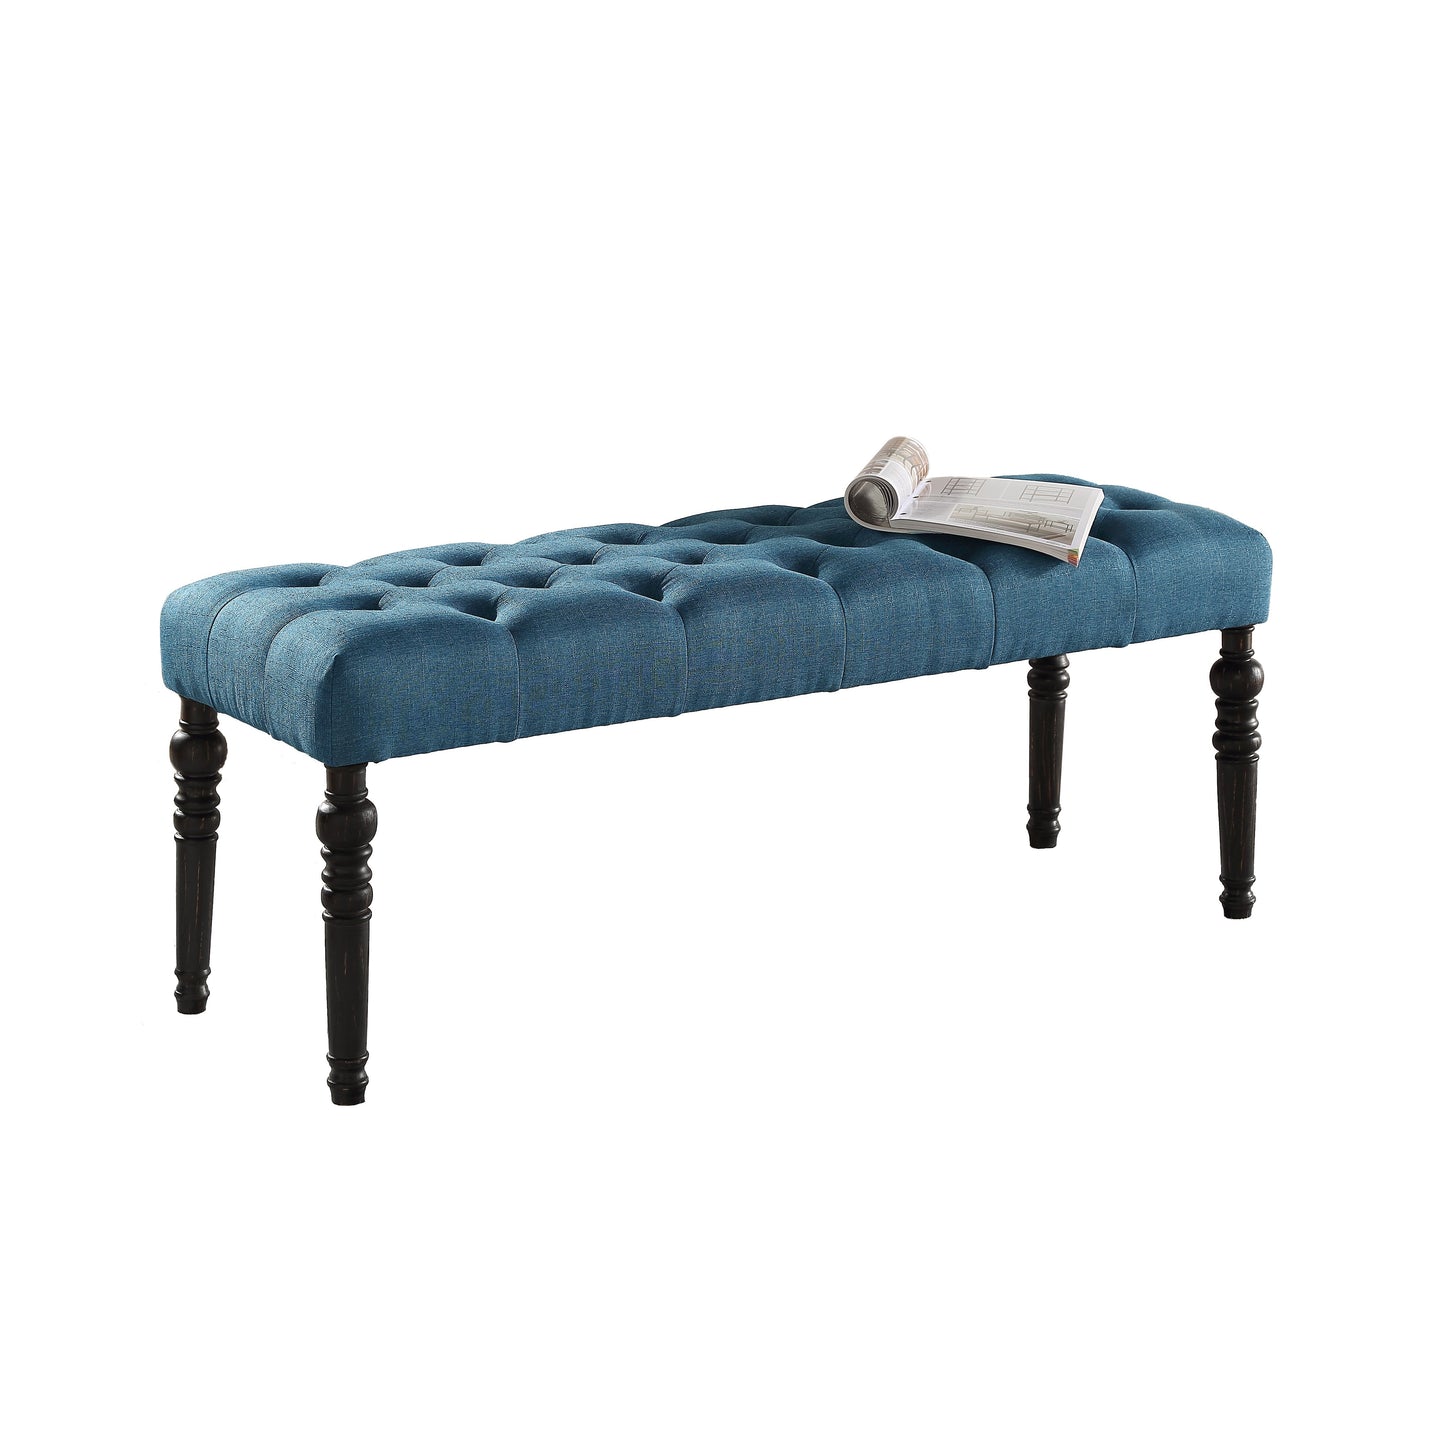 Leviton Fabric Tufted Turned Leg Dining Bench, Blue